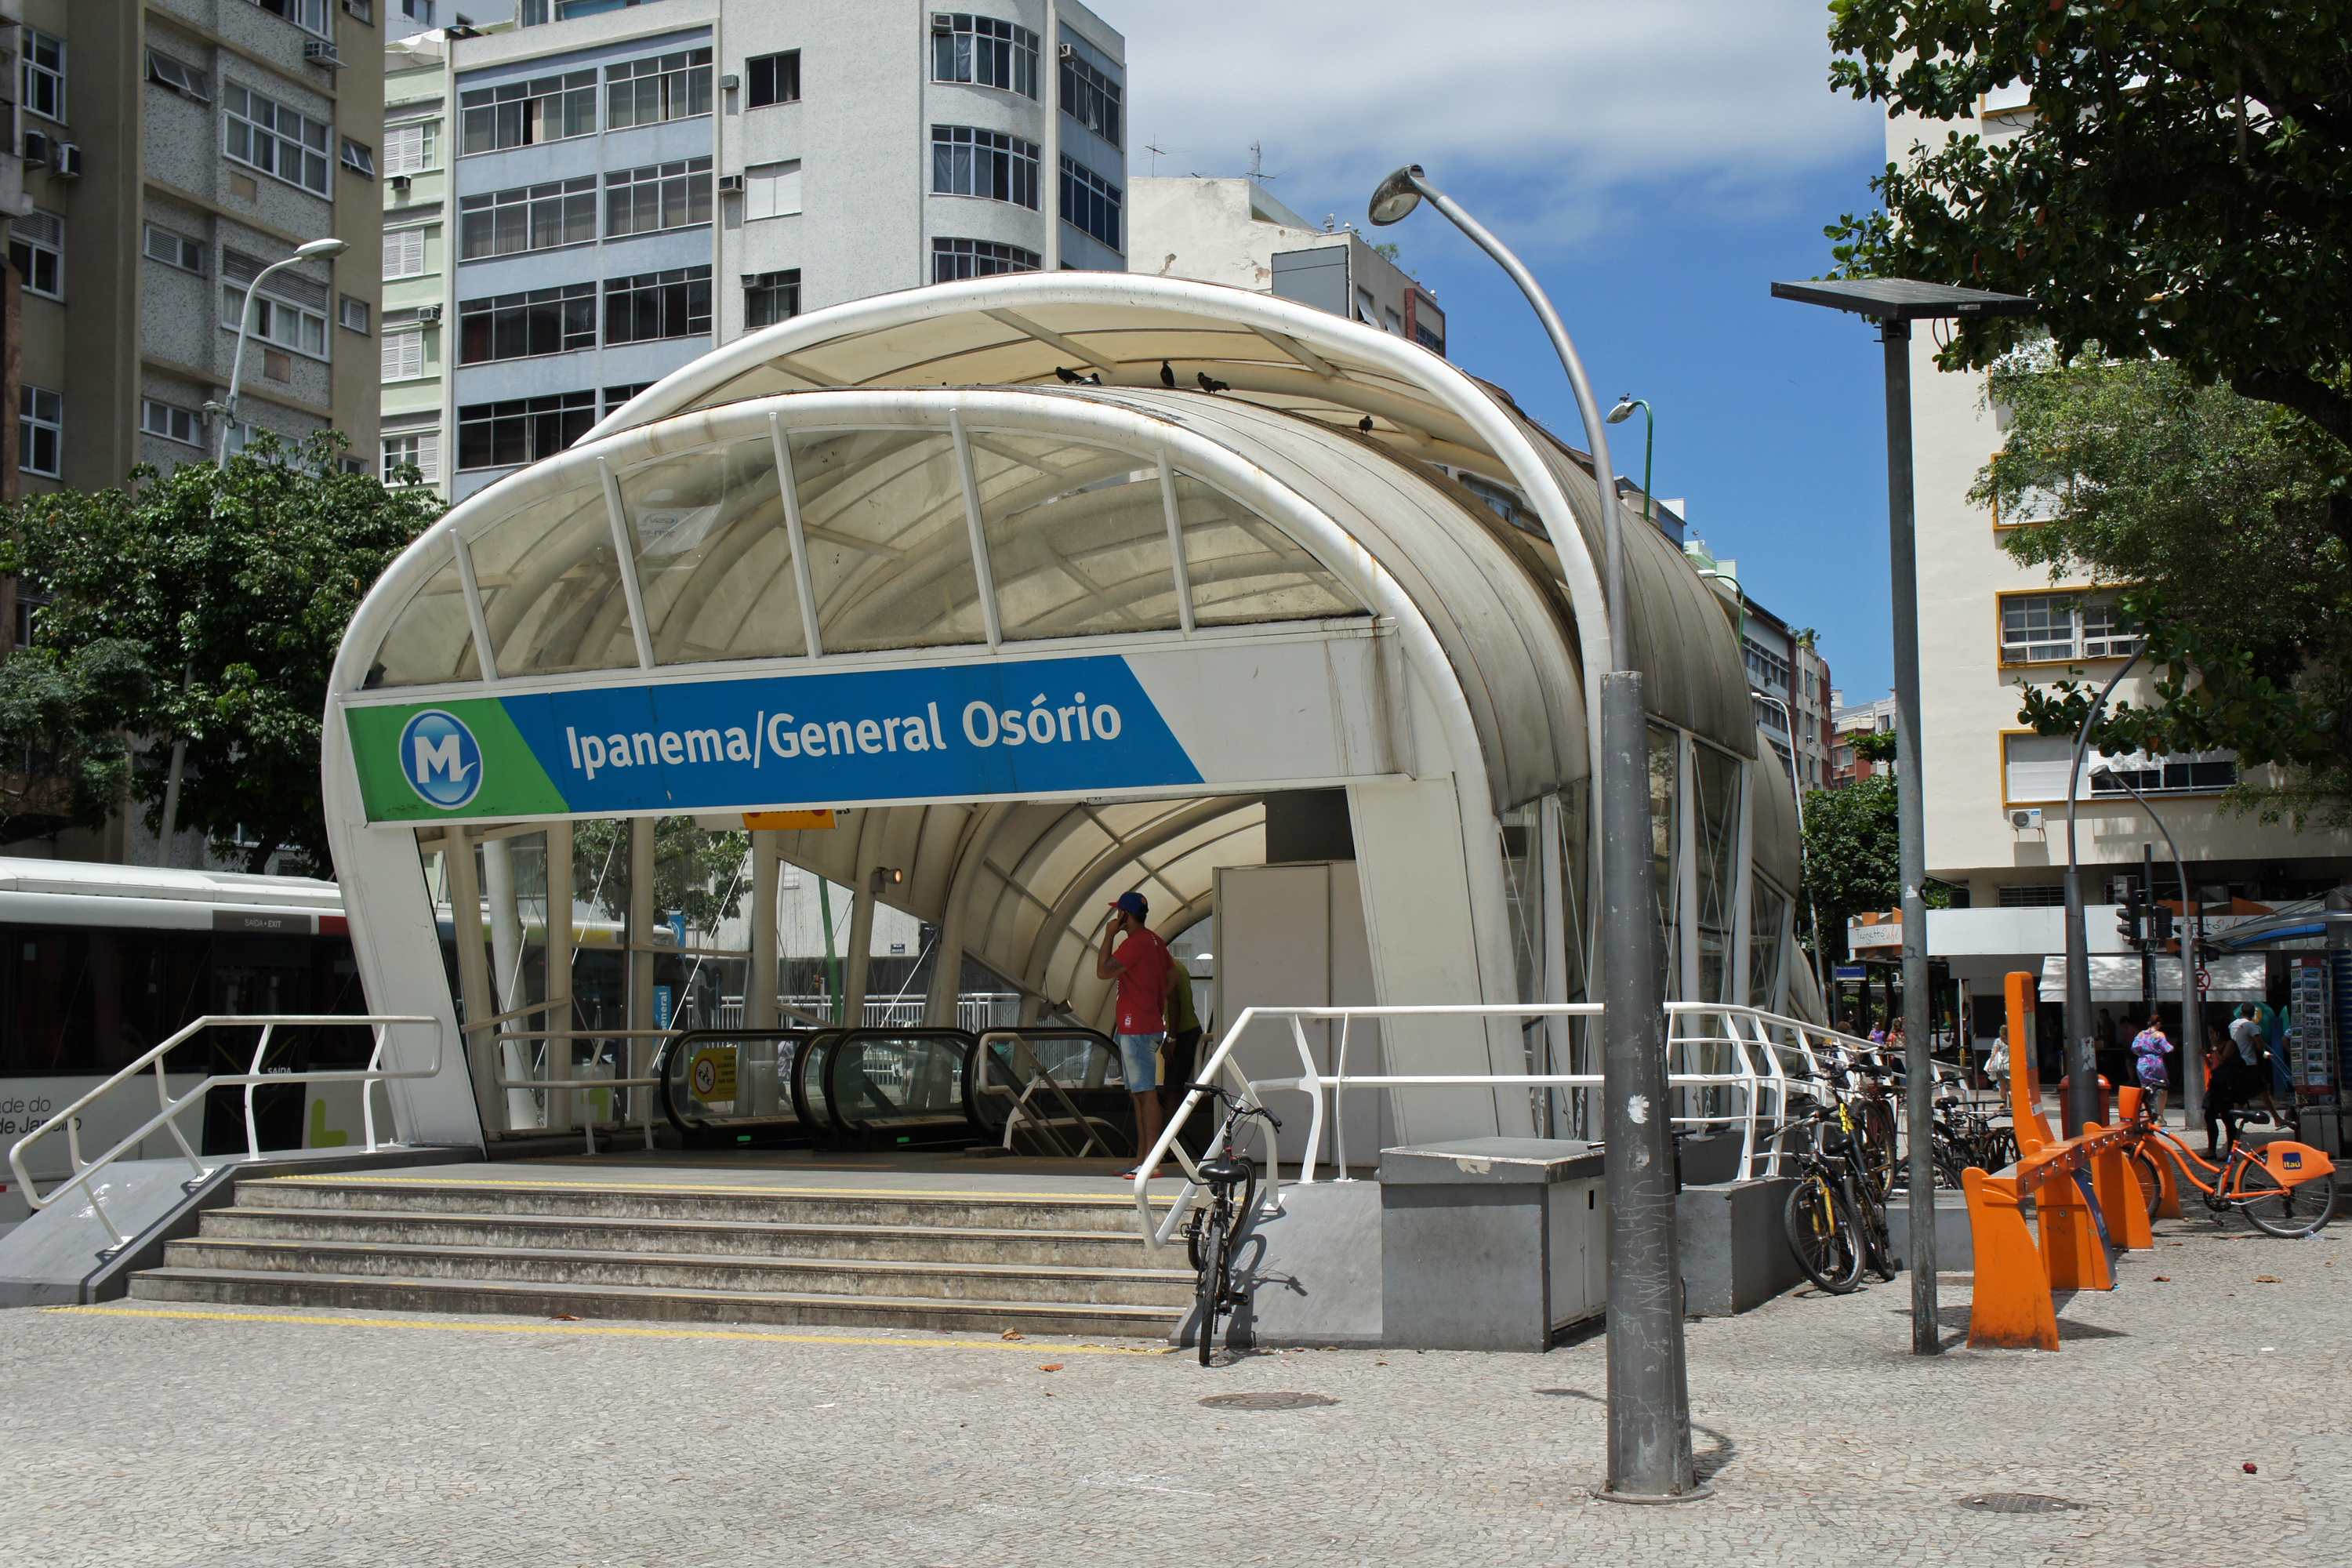 Ipanema/General Osorio Metro station